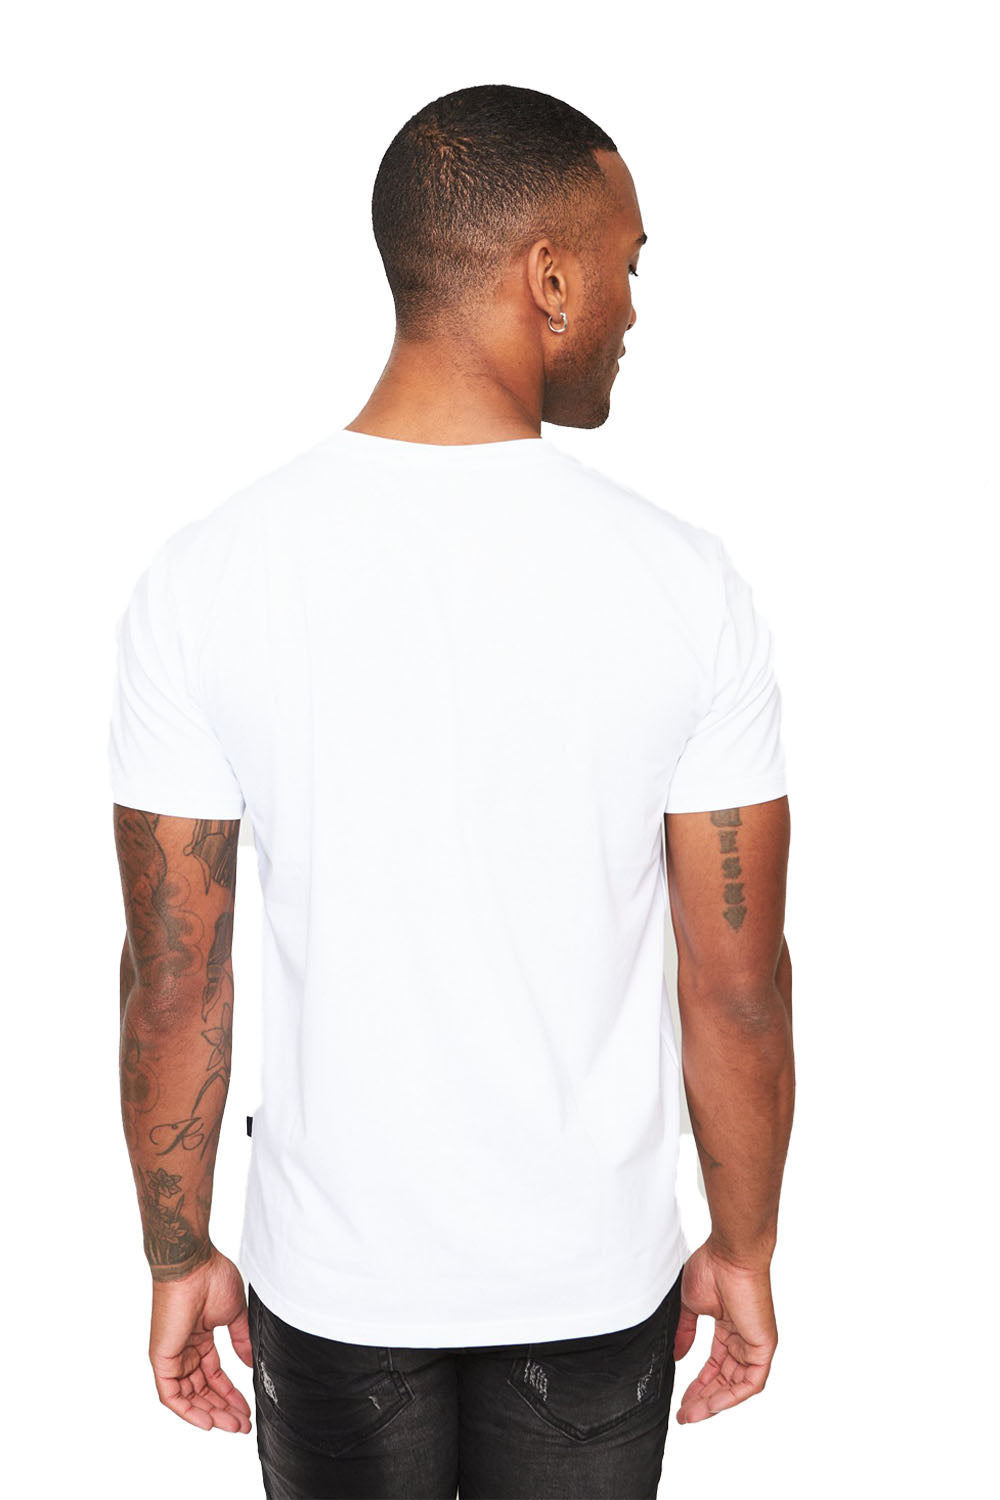 BARABAS Men's Basic Solid Color Crew-neck T-shirts ST933 white